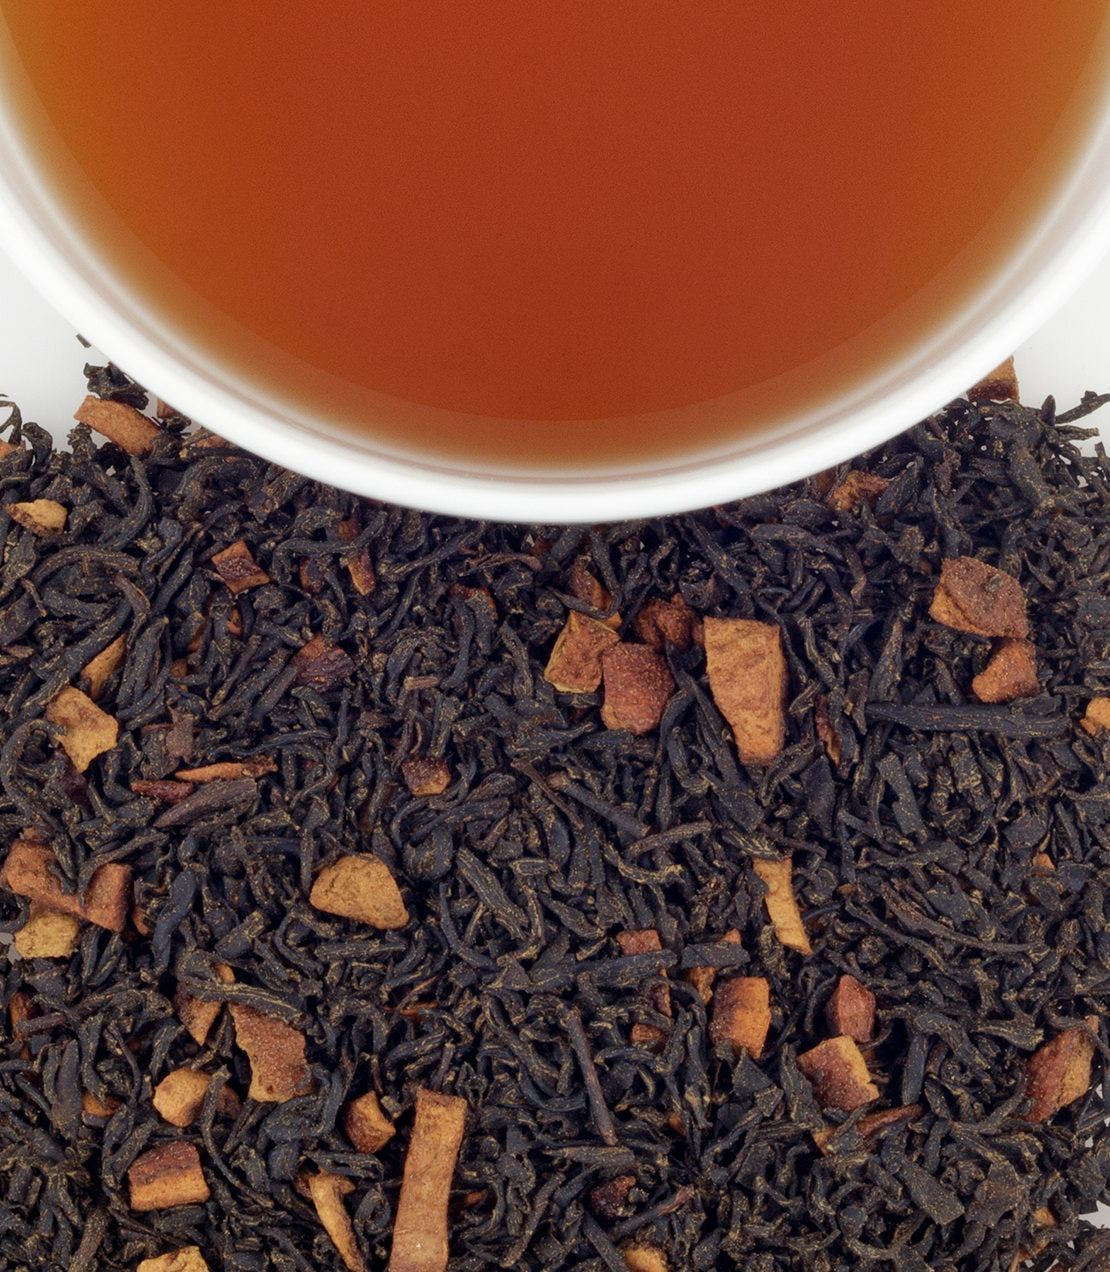 Hot Cinnamon Spice Tea by Harney & Sons.